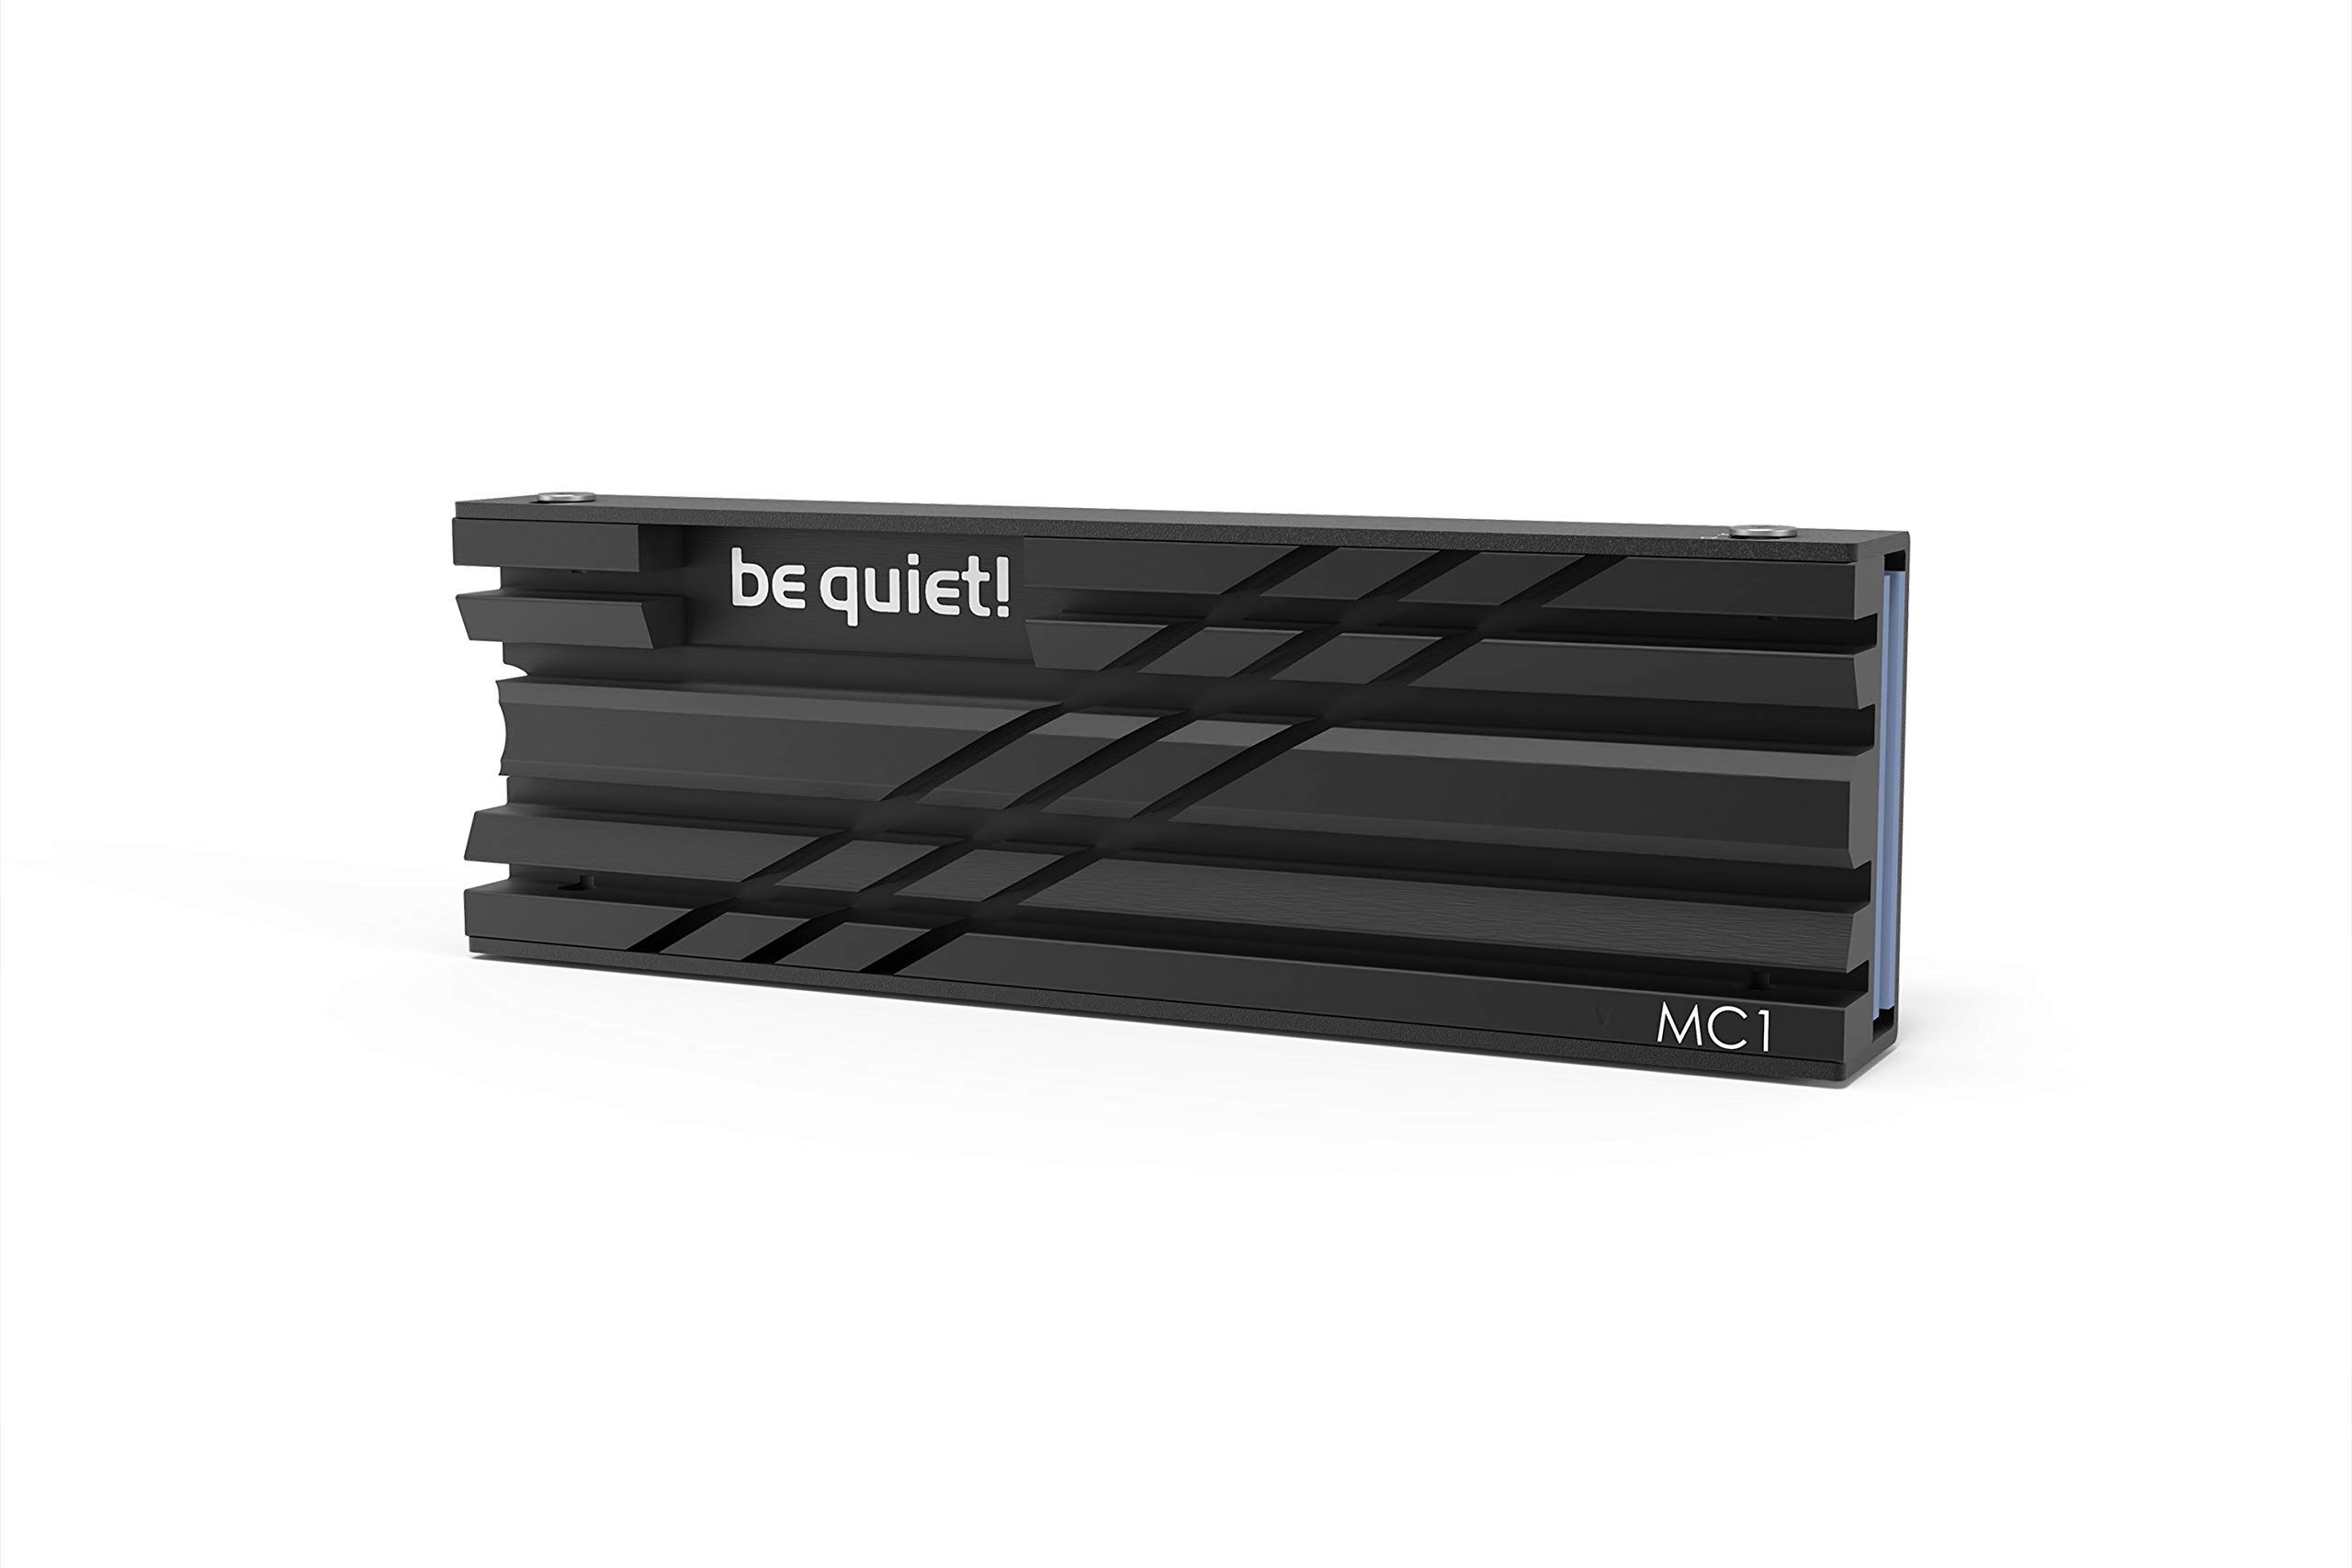 BE QUIET MC1 SSD M.2 COOLER_1